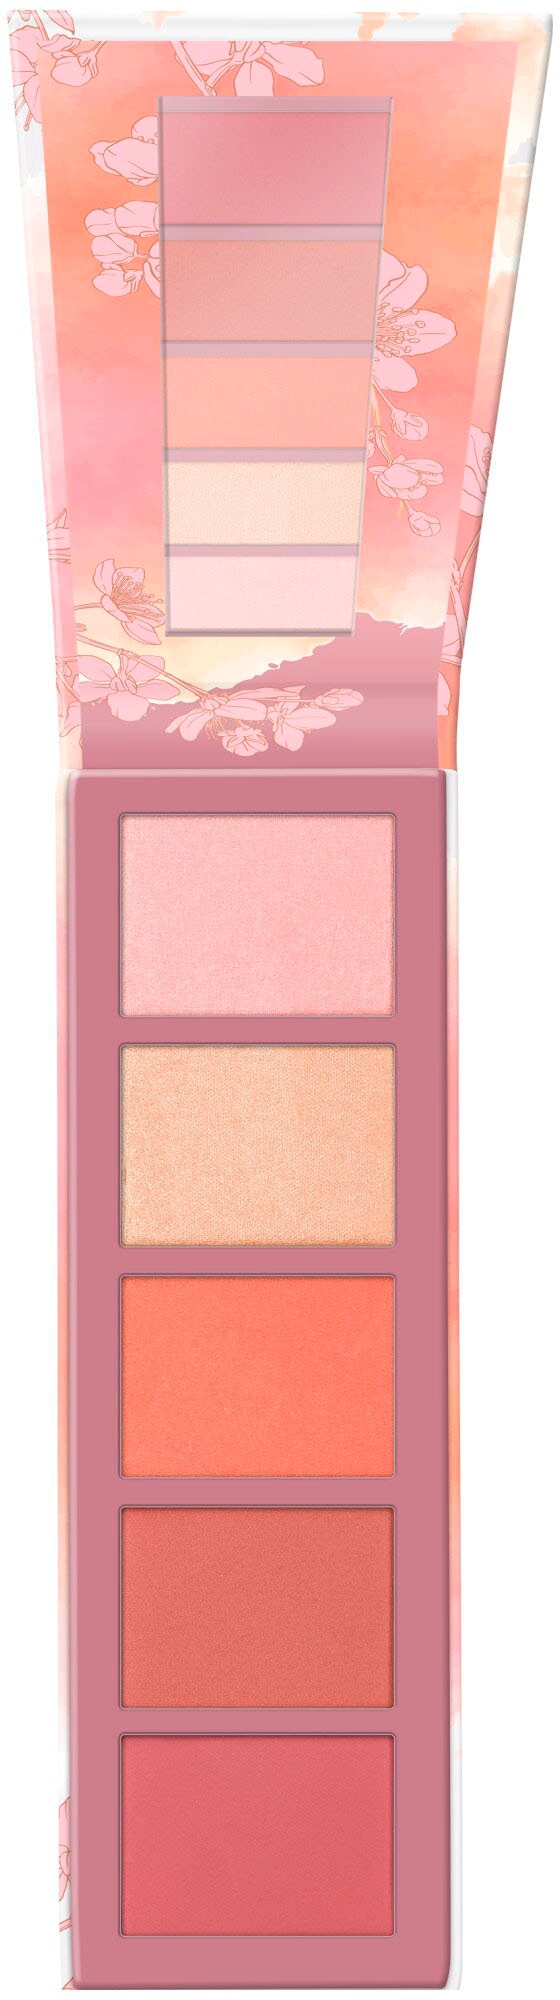 Essence Rouge-Palette »peachy Online BLOSSOM blush im highlighter Shop OTTO palette« 